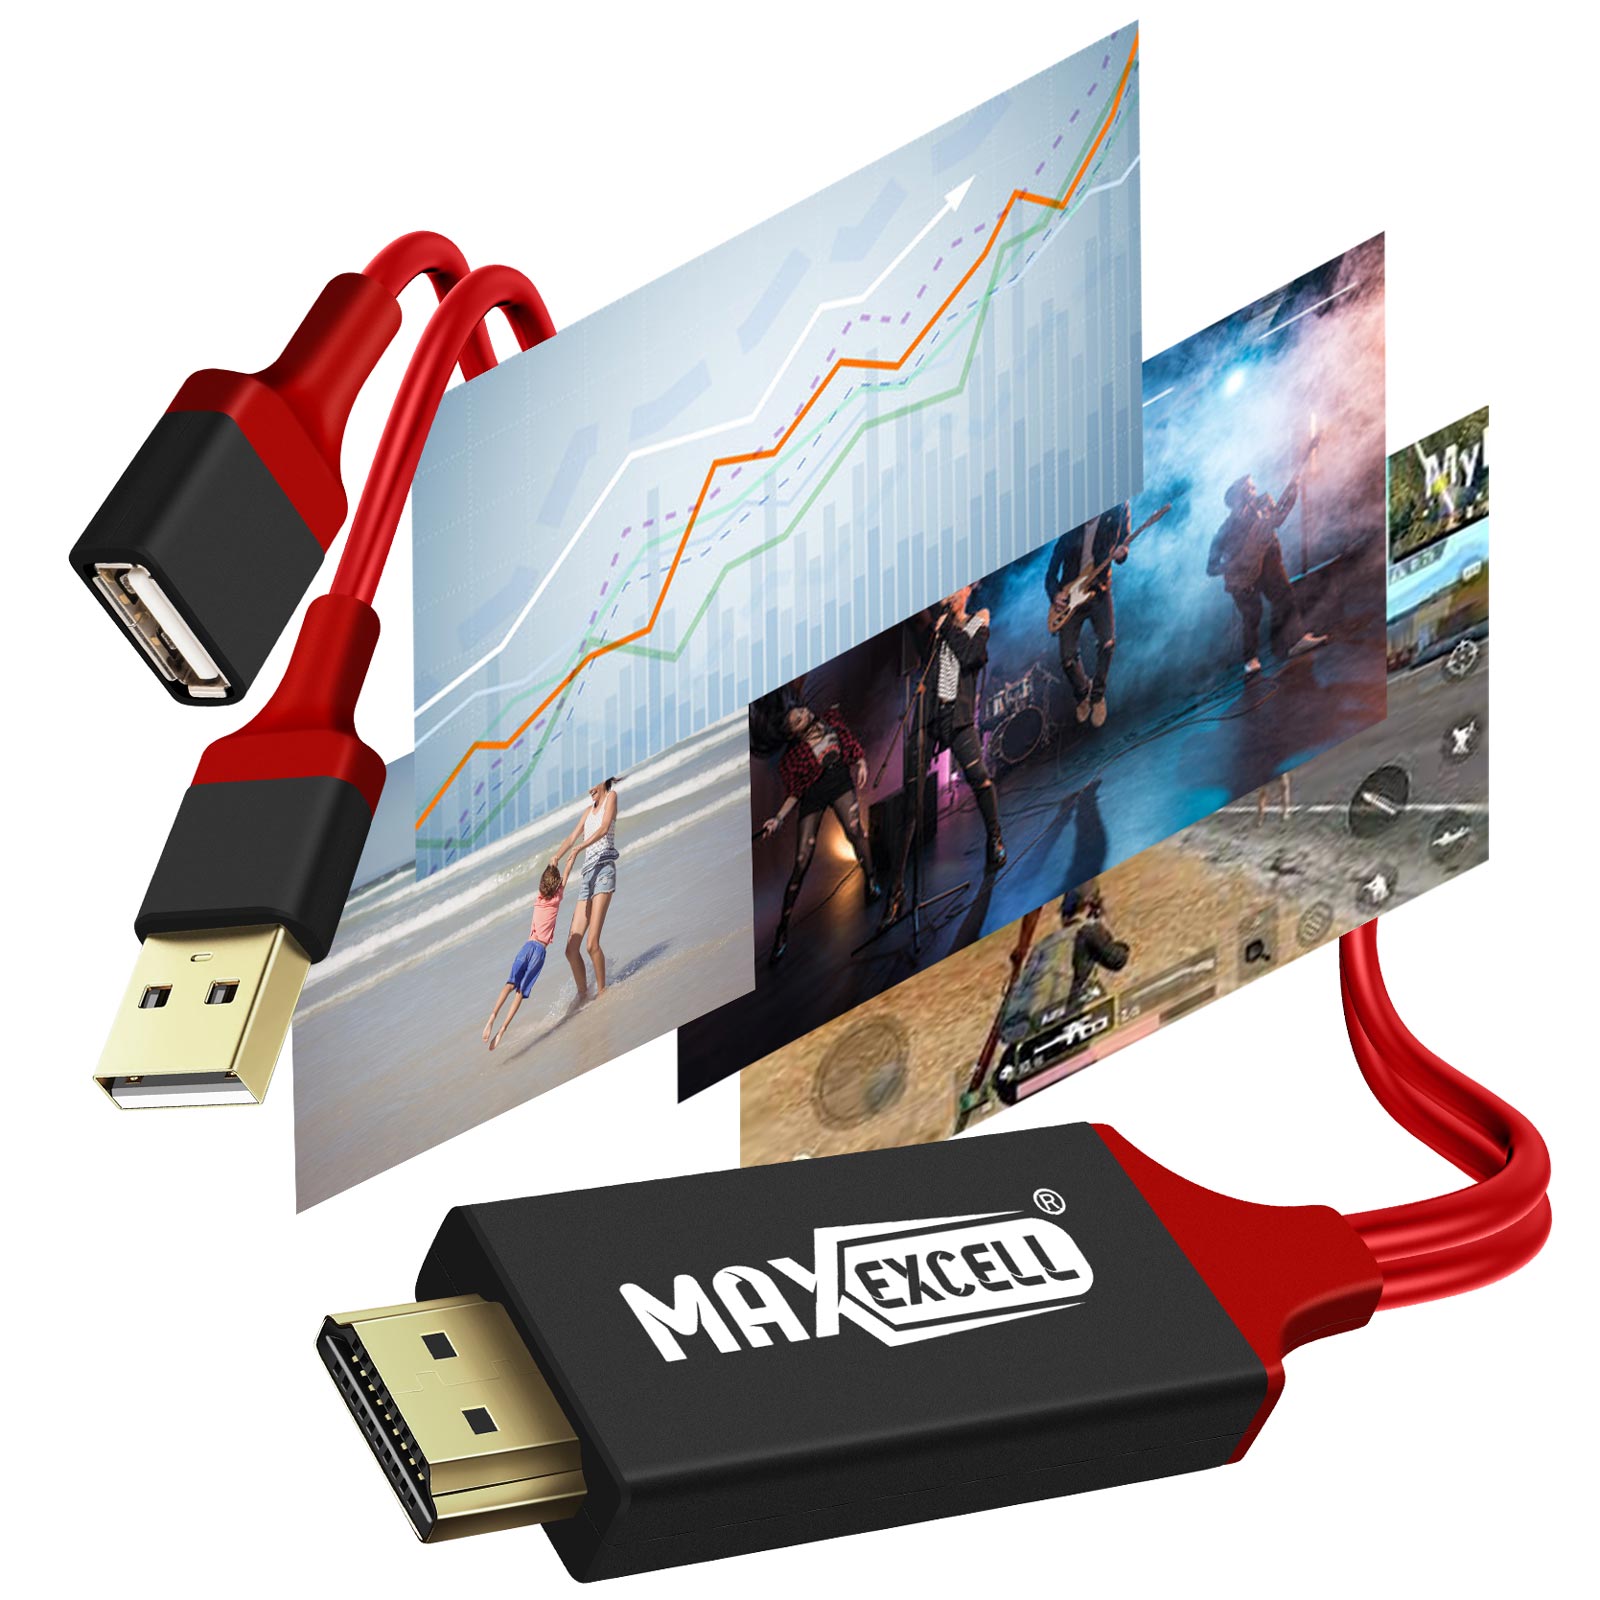 Câble adaptateur MHL Micro-USB mâle vers HDMI Femelle - Français